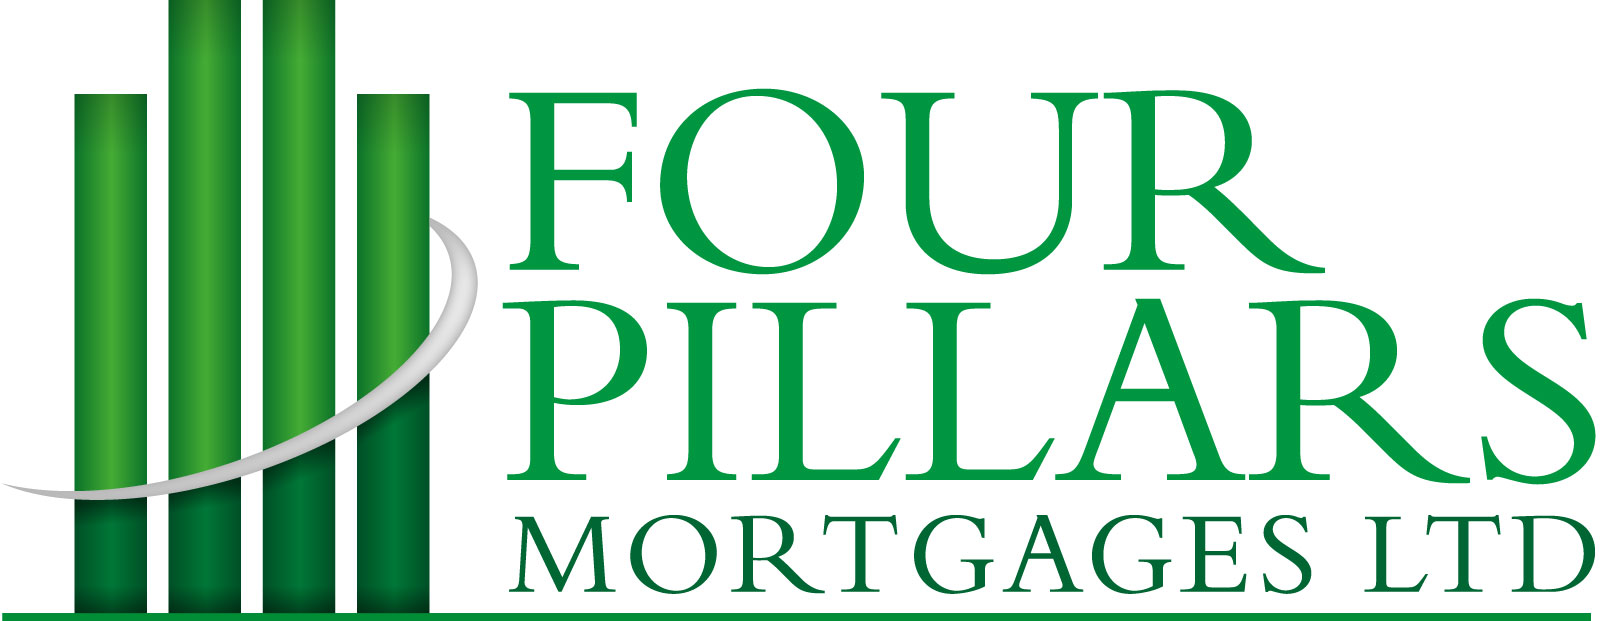 4_Pillars_logo